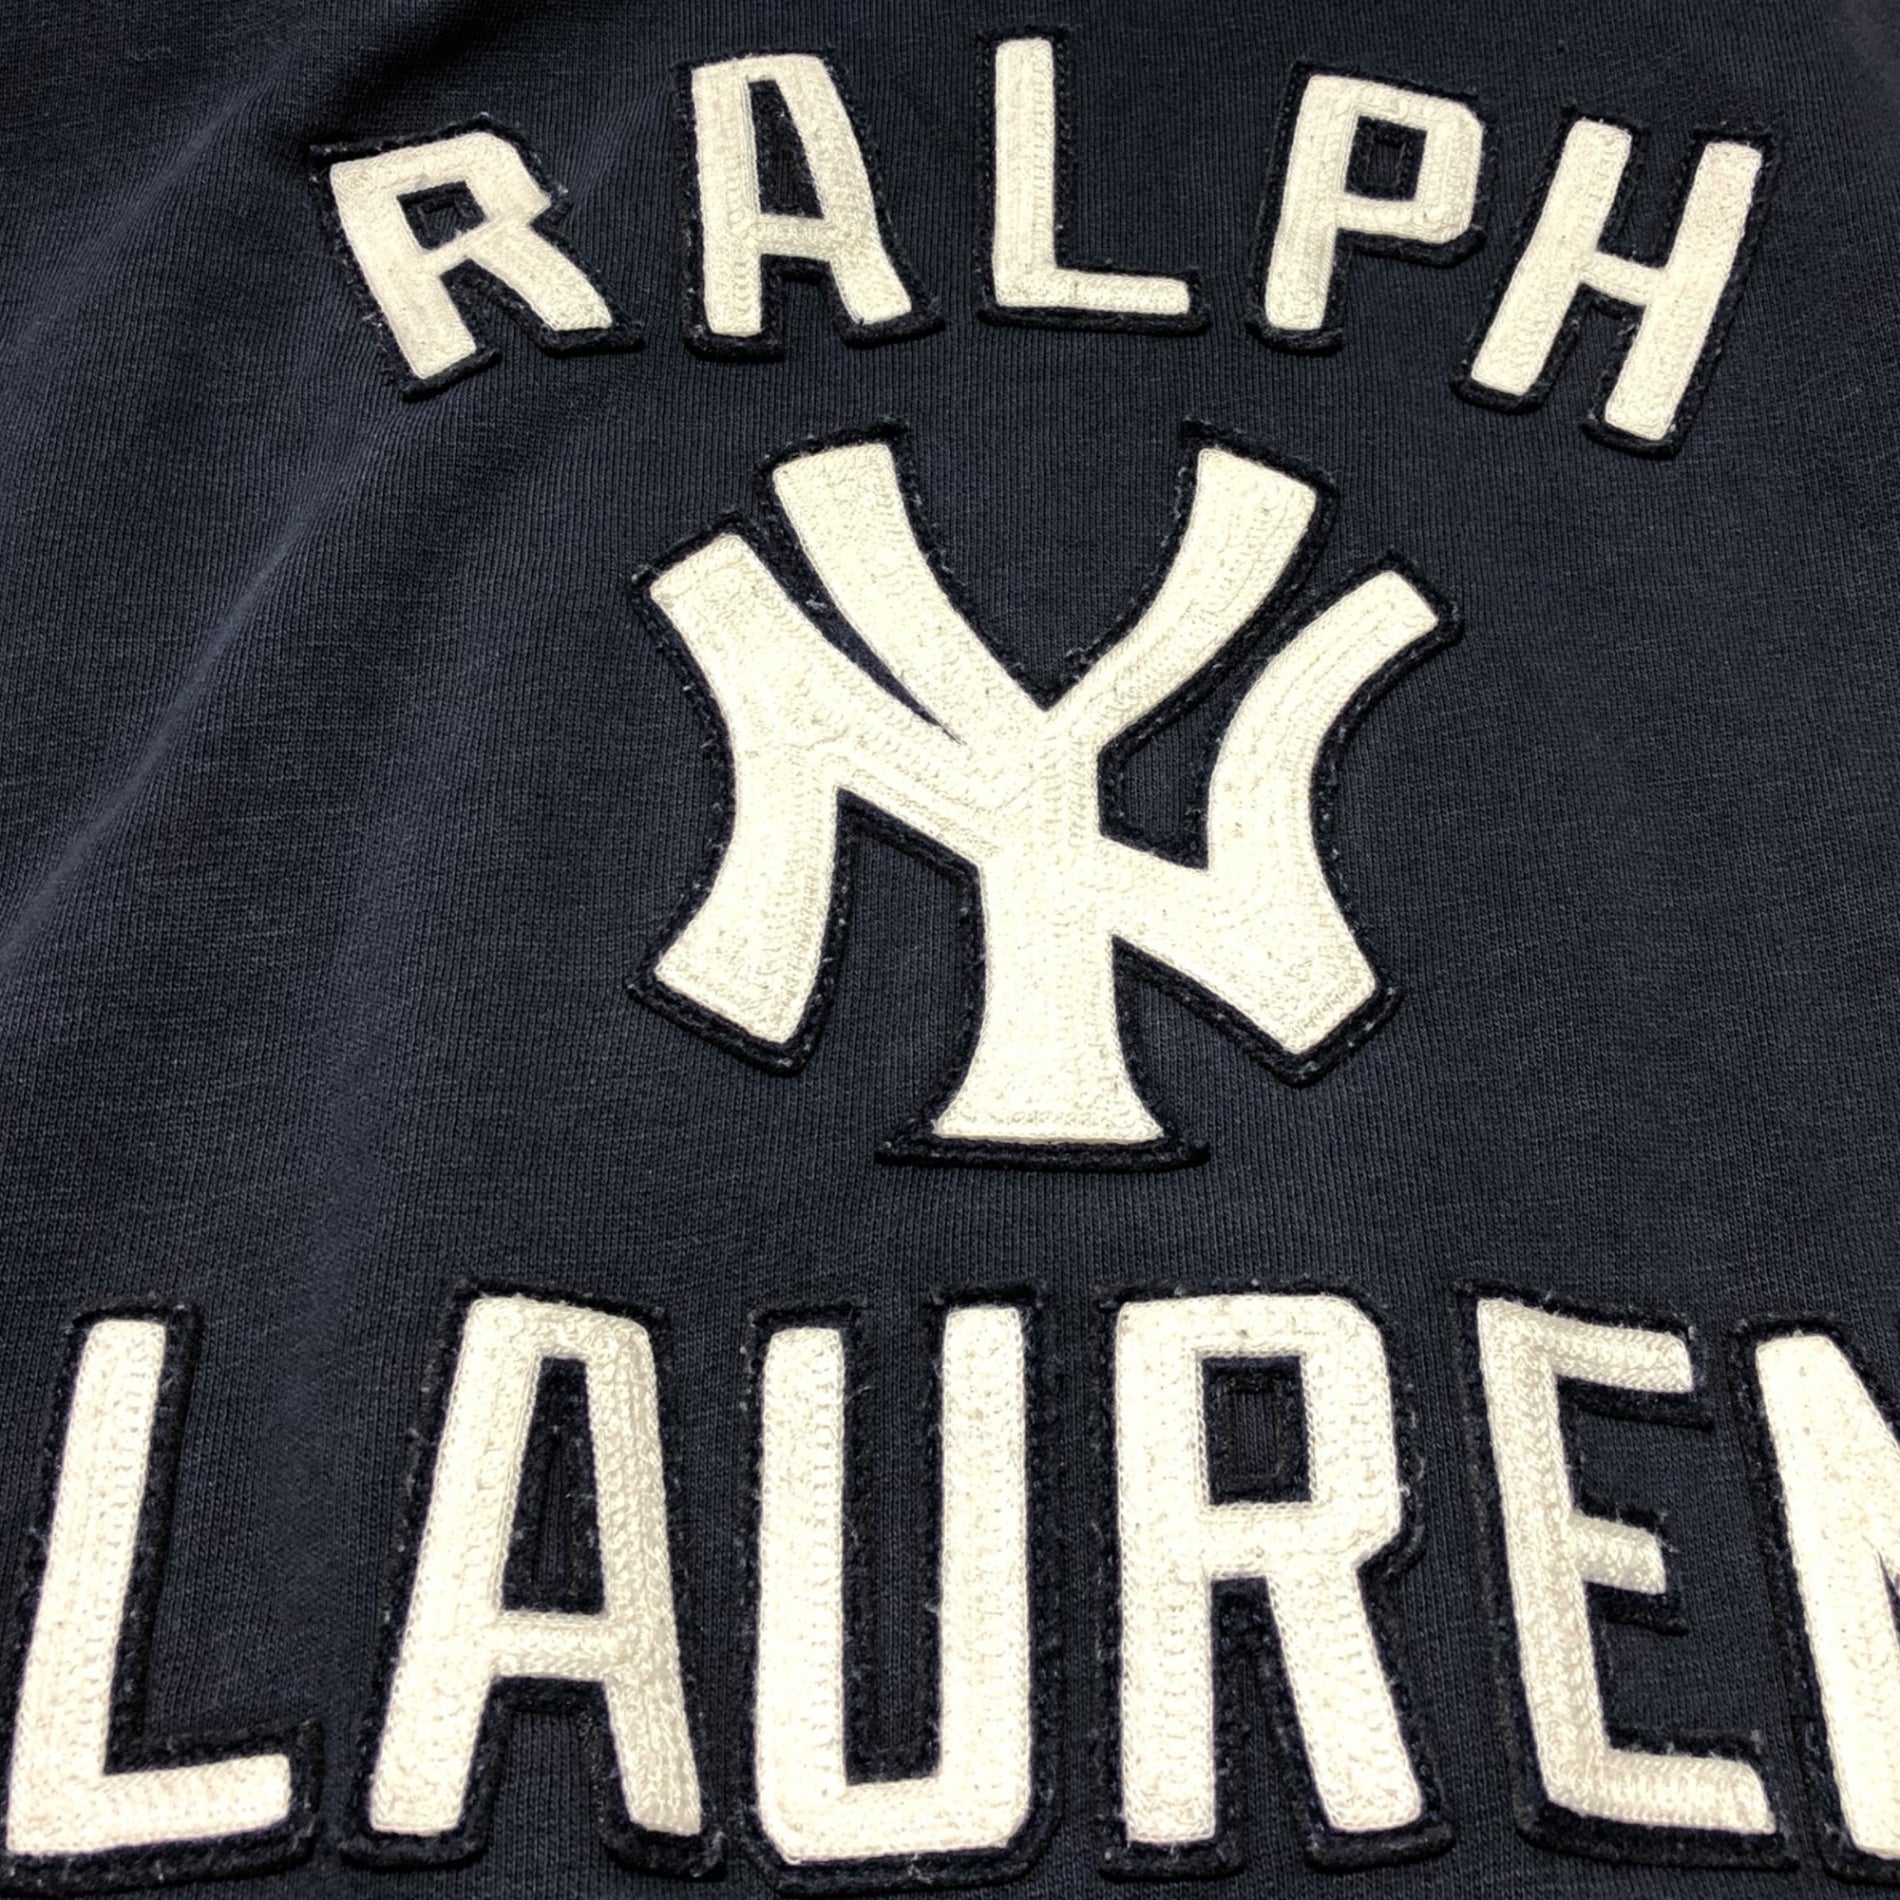 POLO RALPH LAUREN×MLB Yankees(ポロラルフローレン×ヤンキース) yankees logo hoodie ヤンキース ロゴ 刺繍 プルオーバー パーカー S ネイビー コラボ 限定